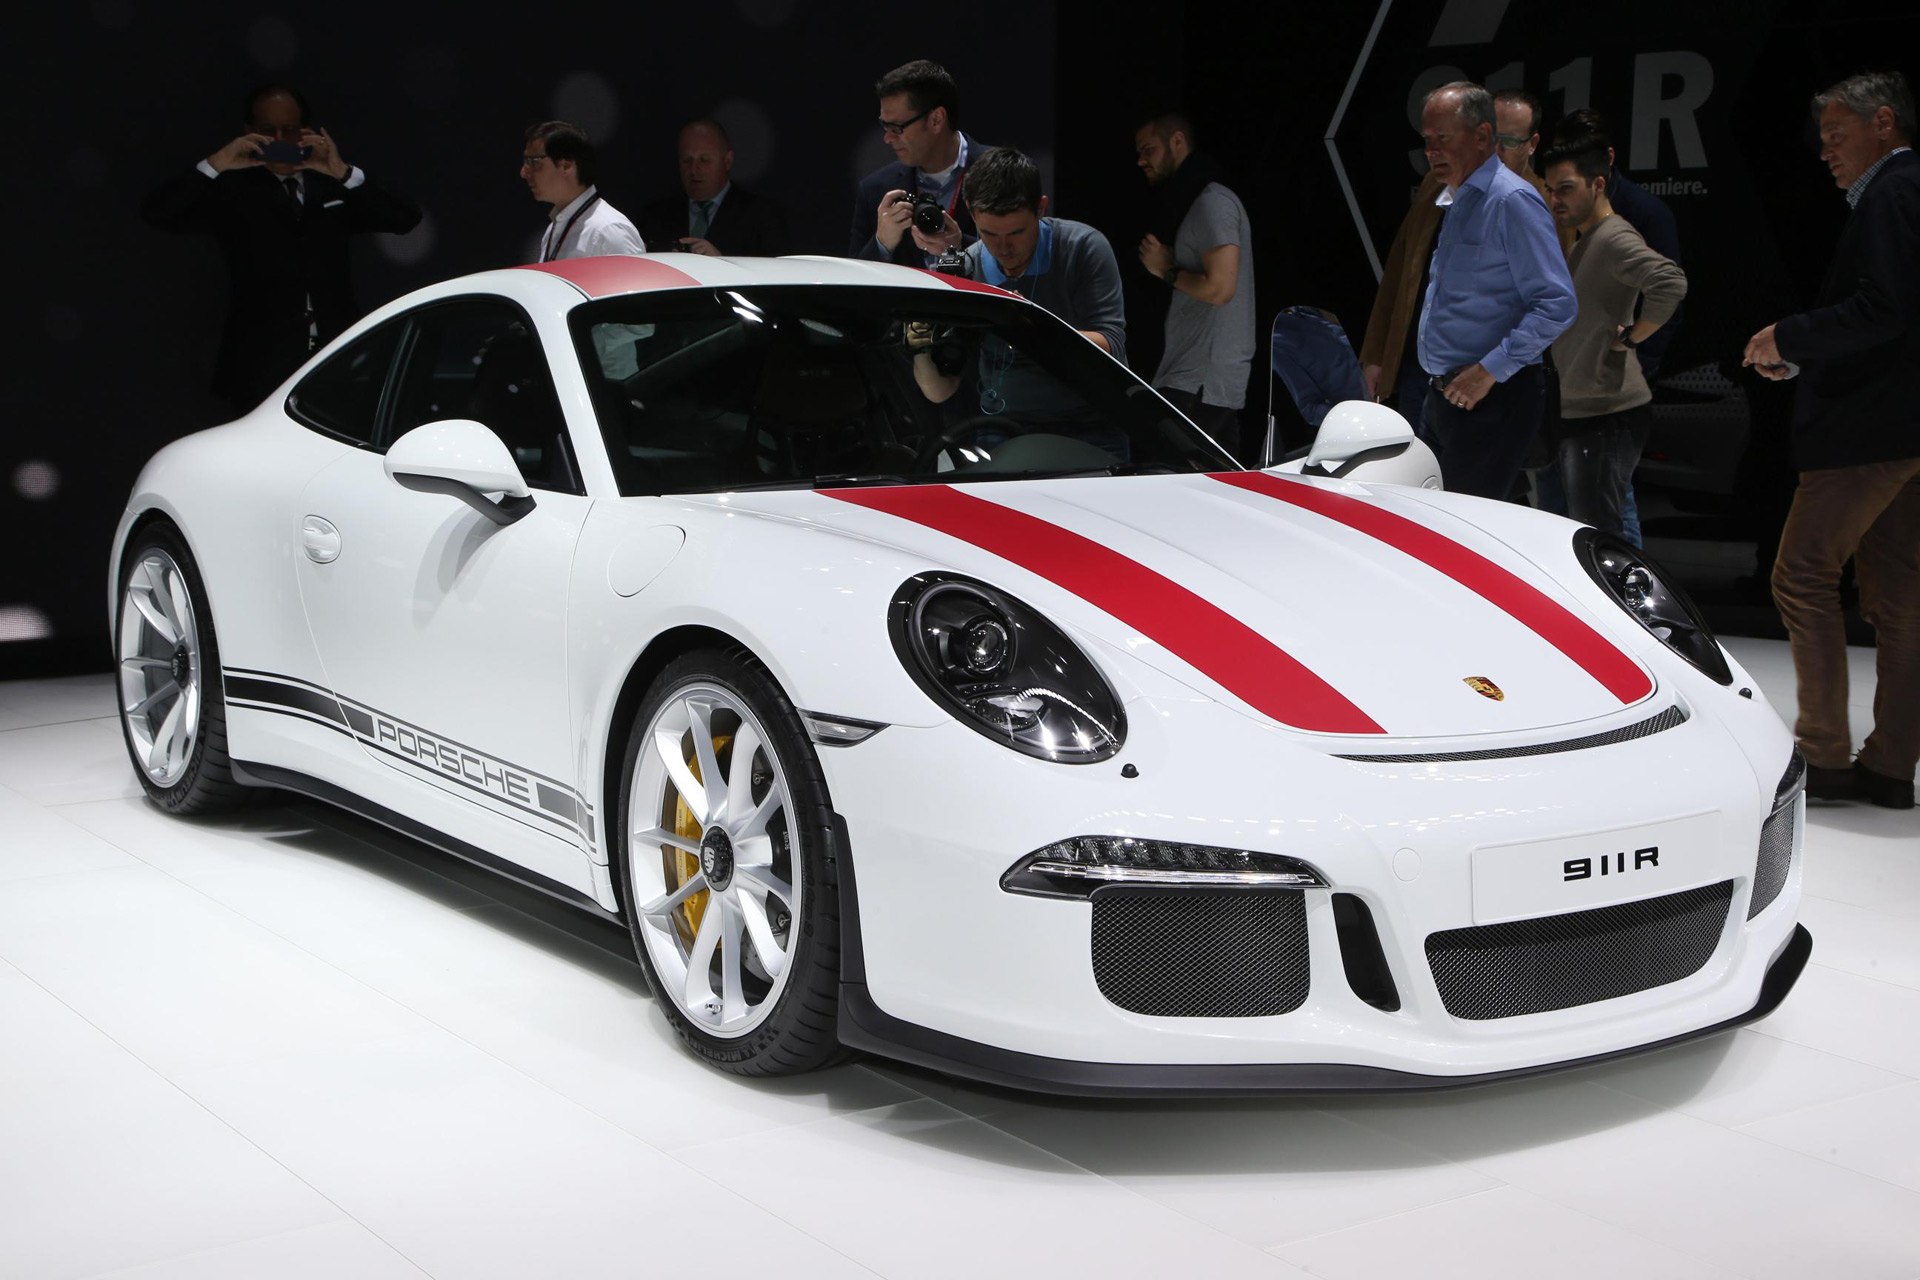 2016 Porsche 911 R debuts at Geneva auto show